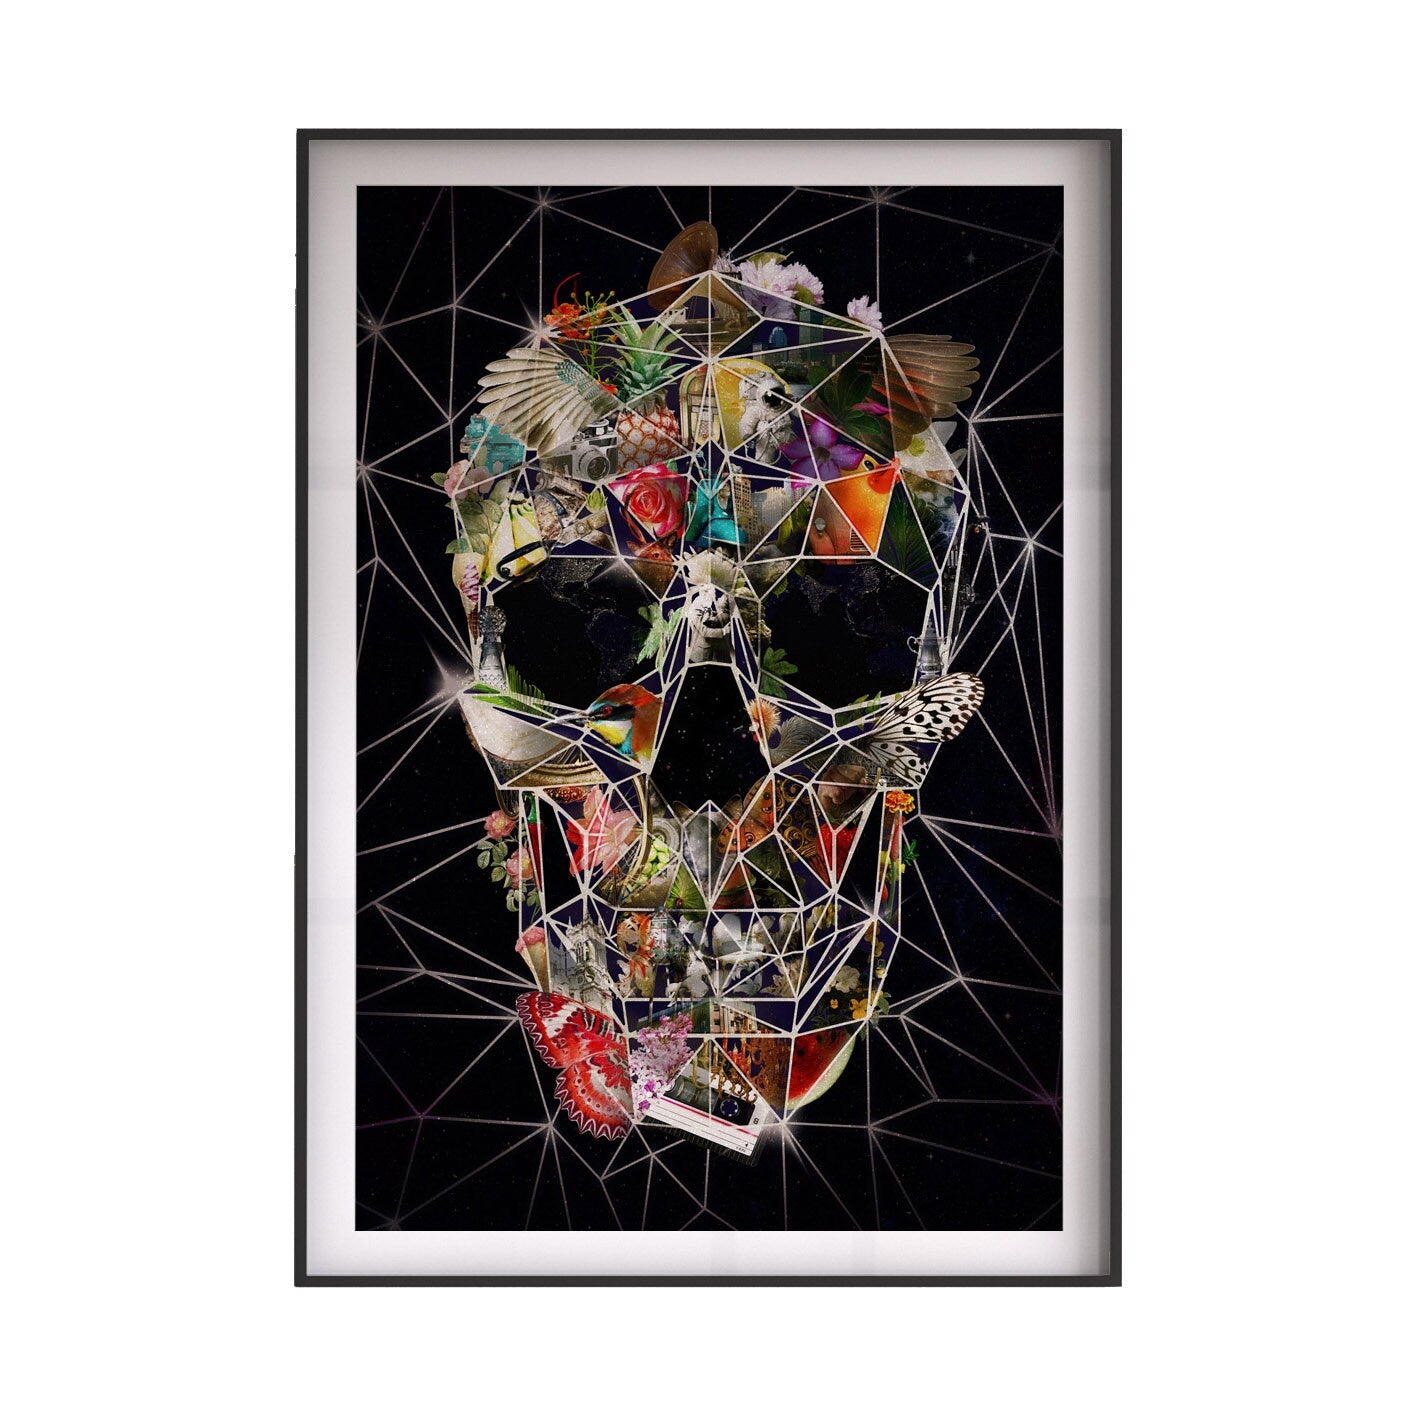 Fragile Skull Poster, Digital Skull Art Print, Sugar Skull Wall Art, Abstract Skull Poster Home Decor, Geometric Illustration By Ali Gulec